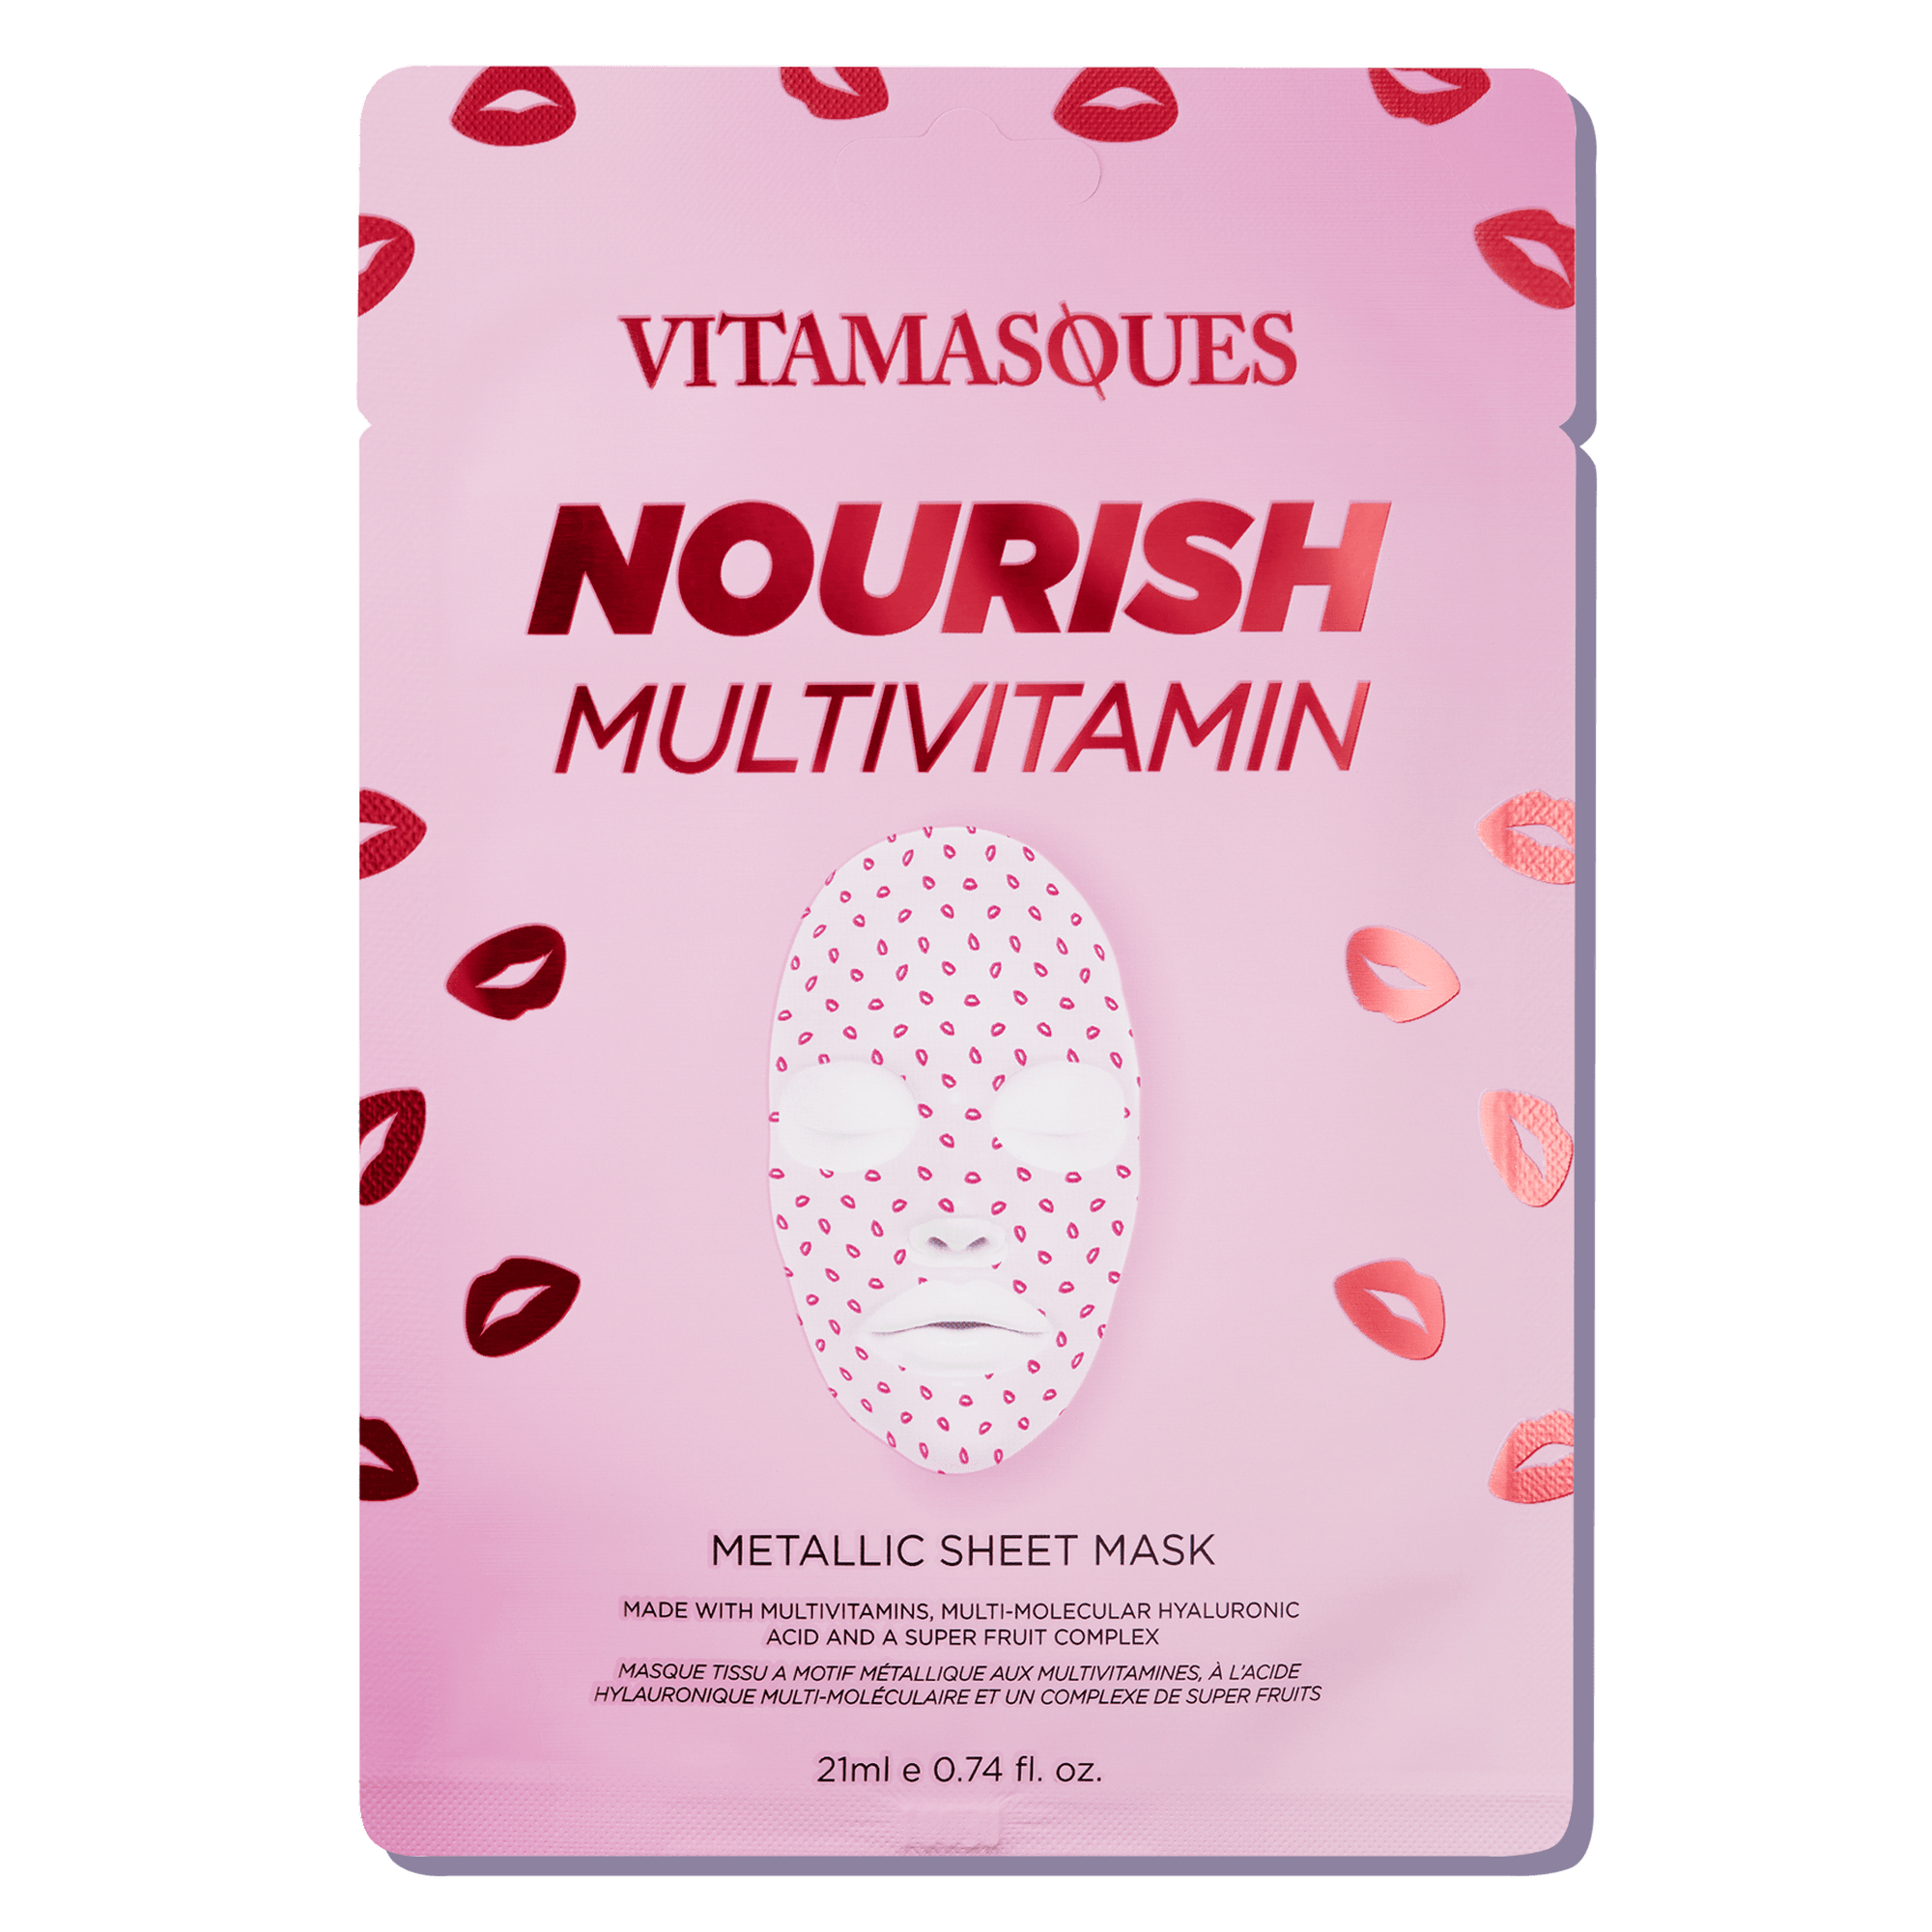 Nourish Multivitamin Metallic Face Sheet Mask - Vitamasques